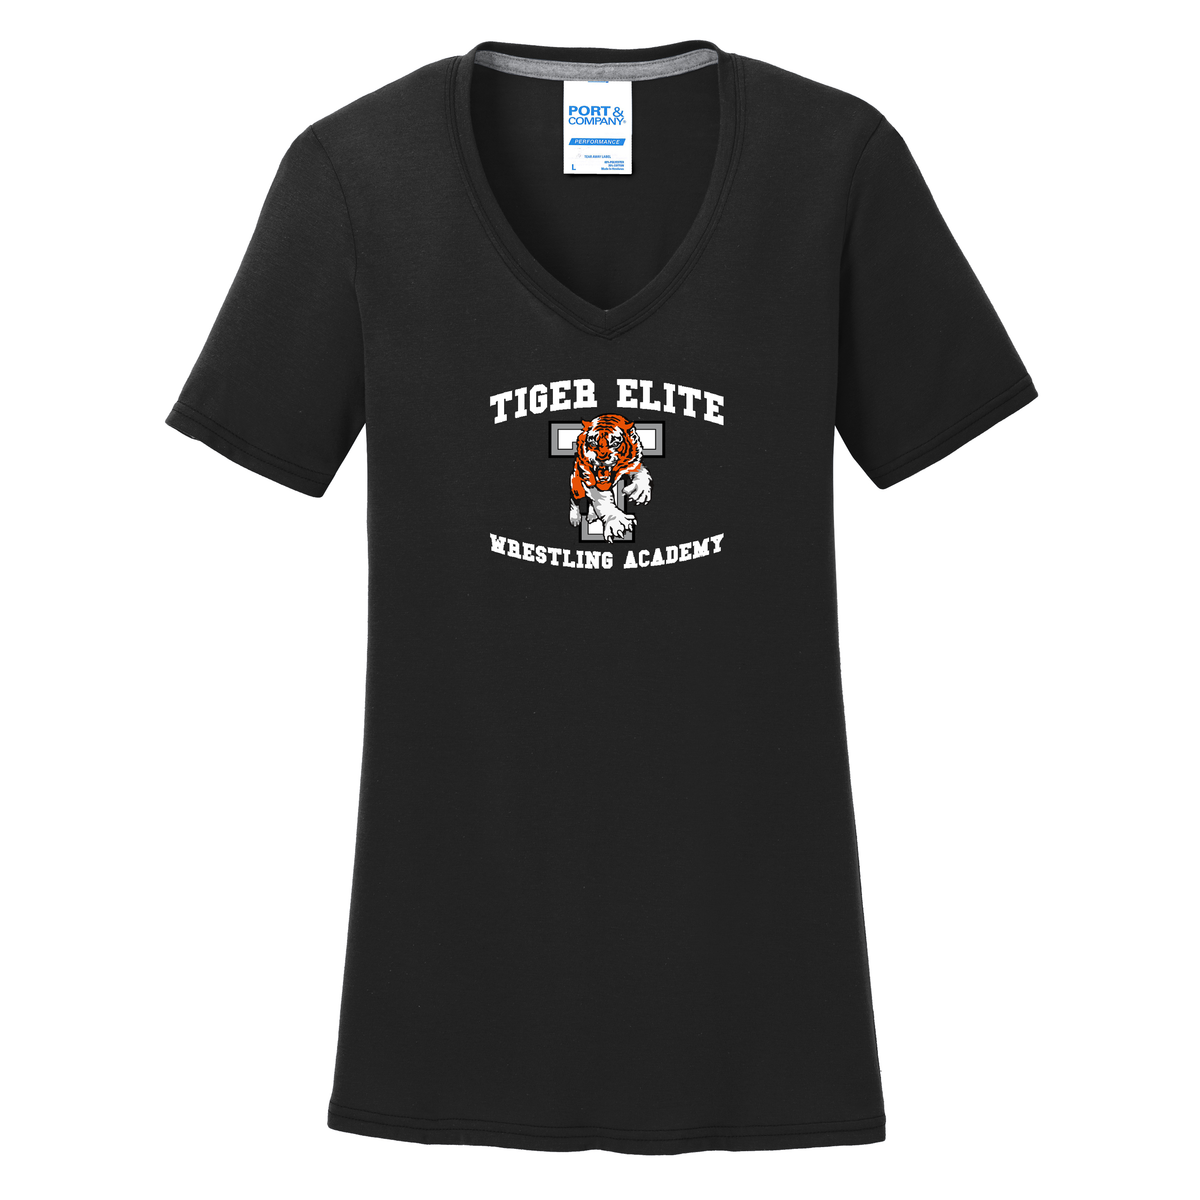 Tiger Elite Wrestling Academy  Women's T-Shirt